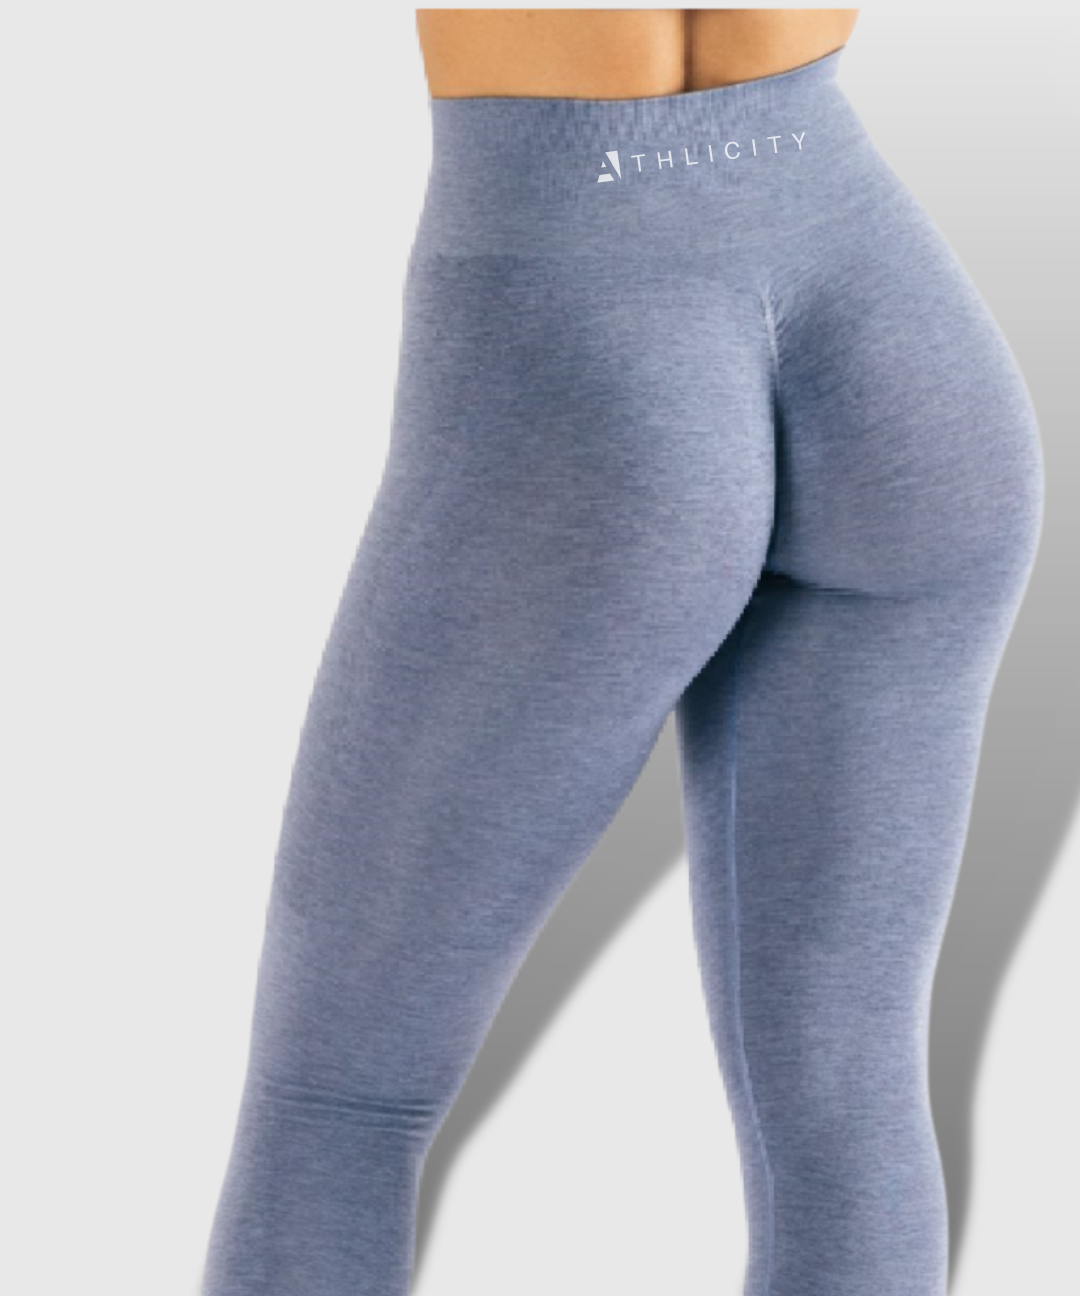 AUROLA Intensify Seamless Scrunch Legging Women Yoga Pants 7/8